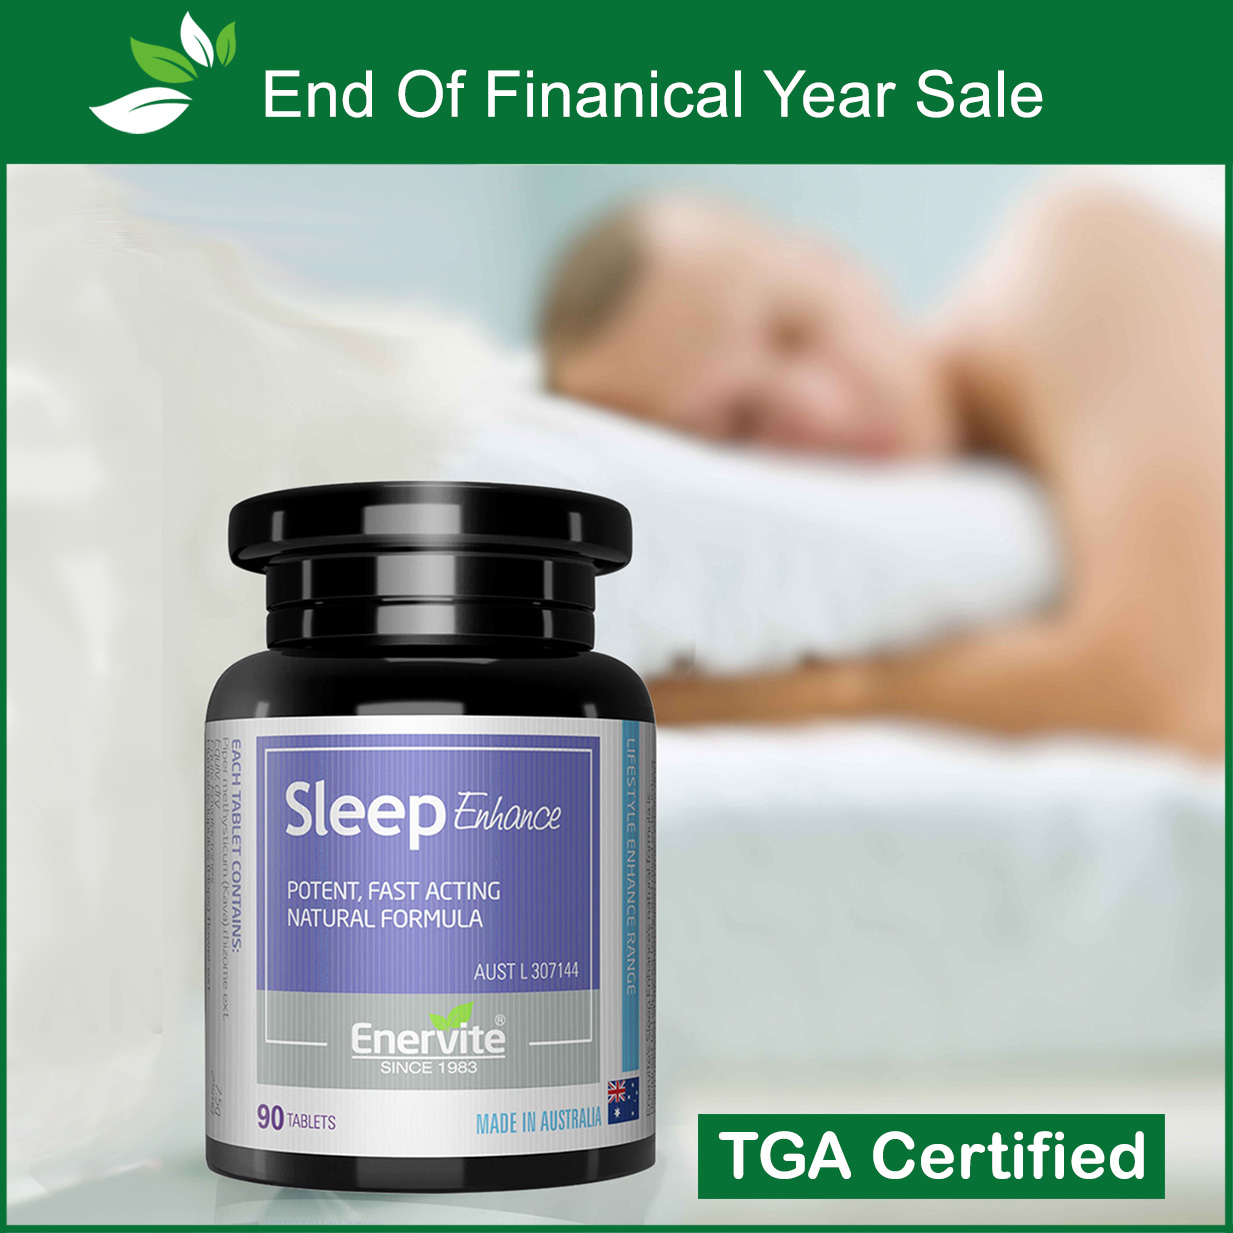 Sleep Enhance End of Finanical Year Sale